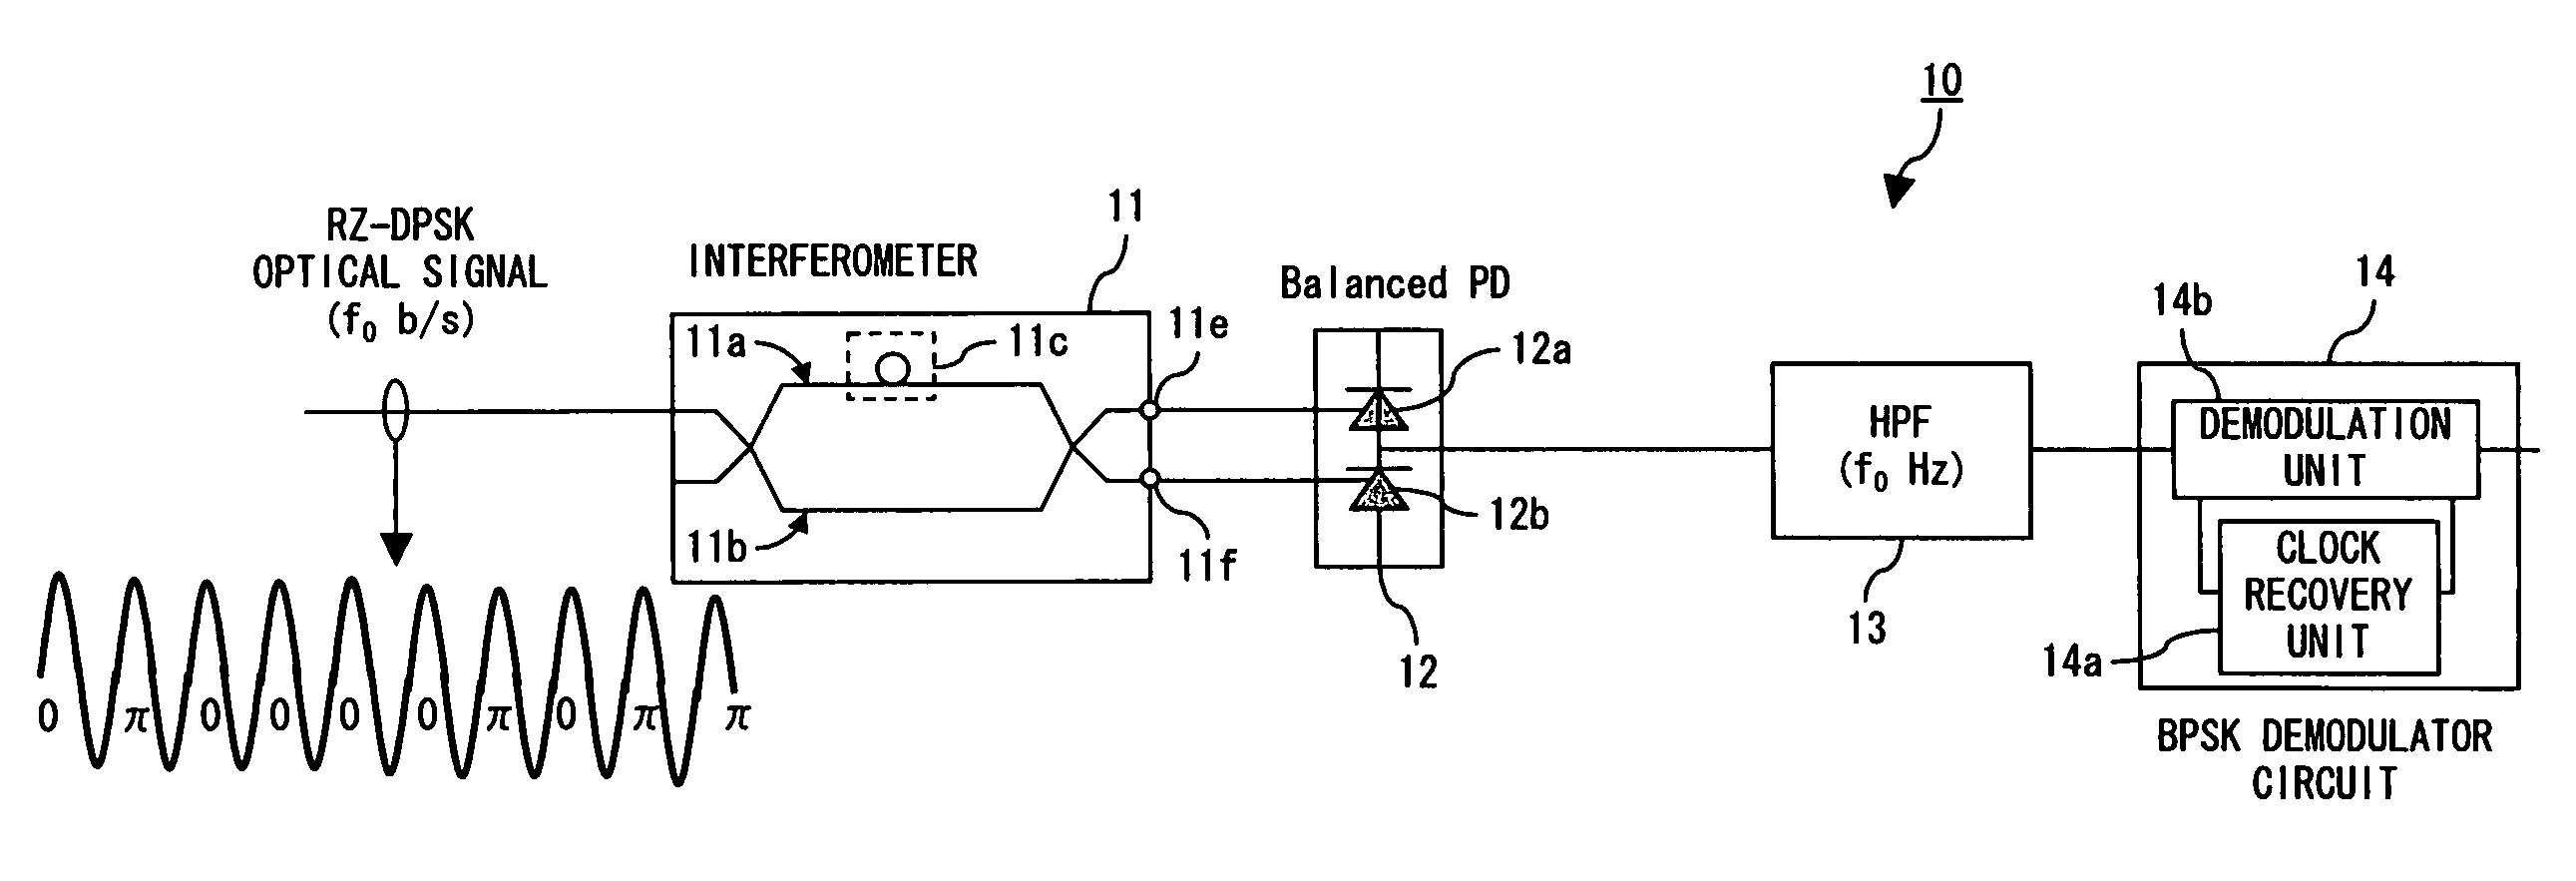 RZ-DPSK optical receiver circuit